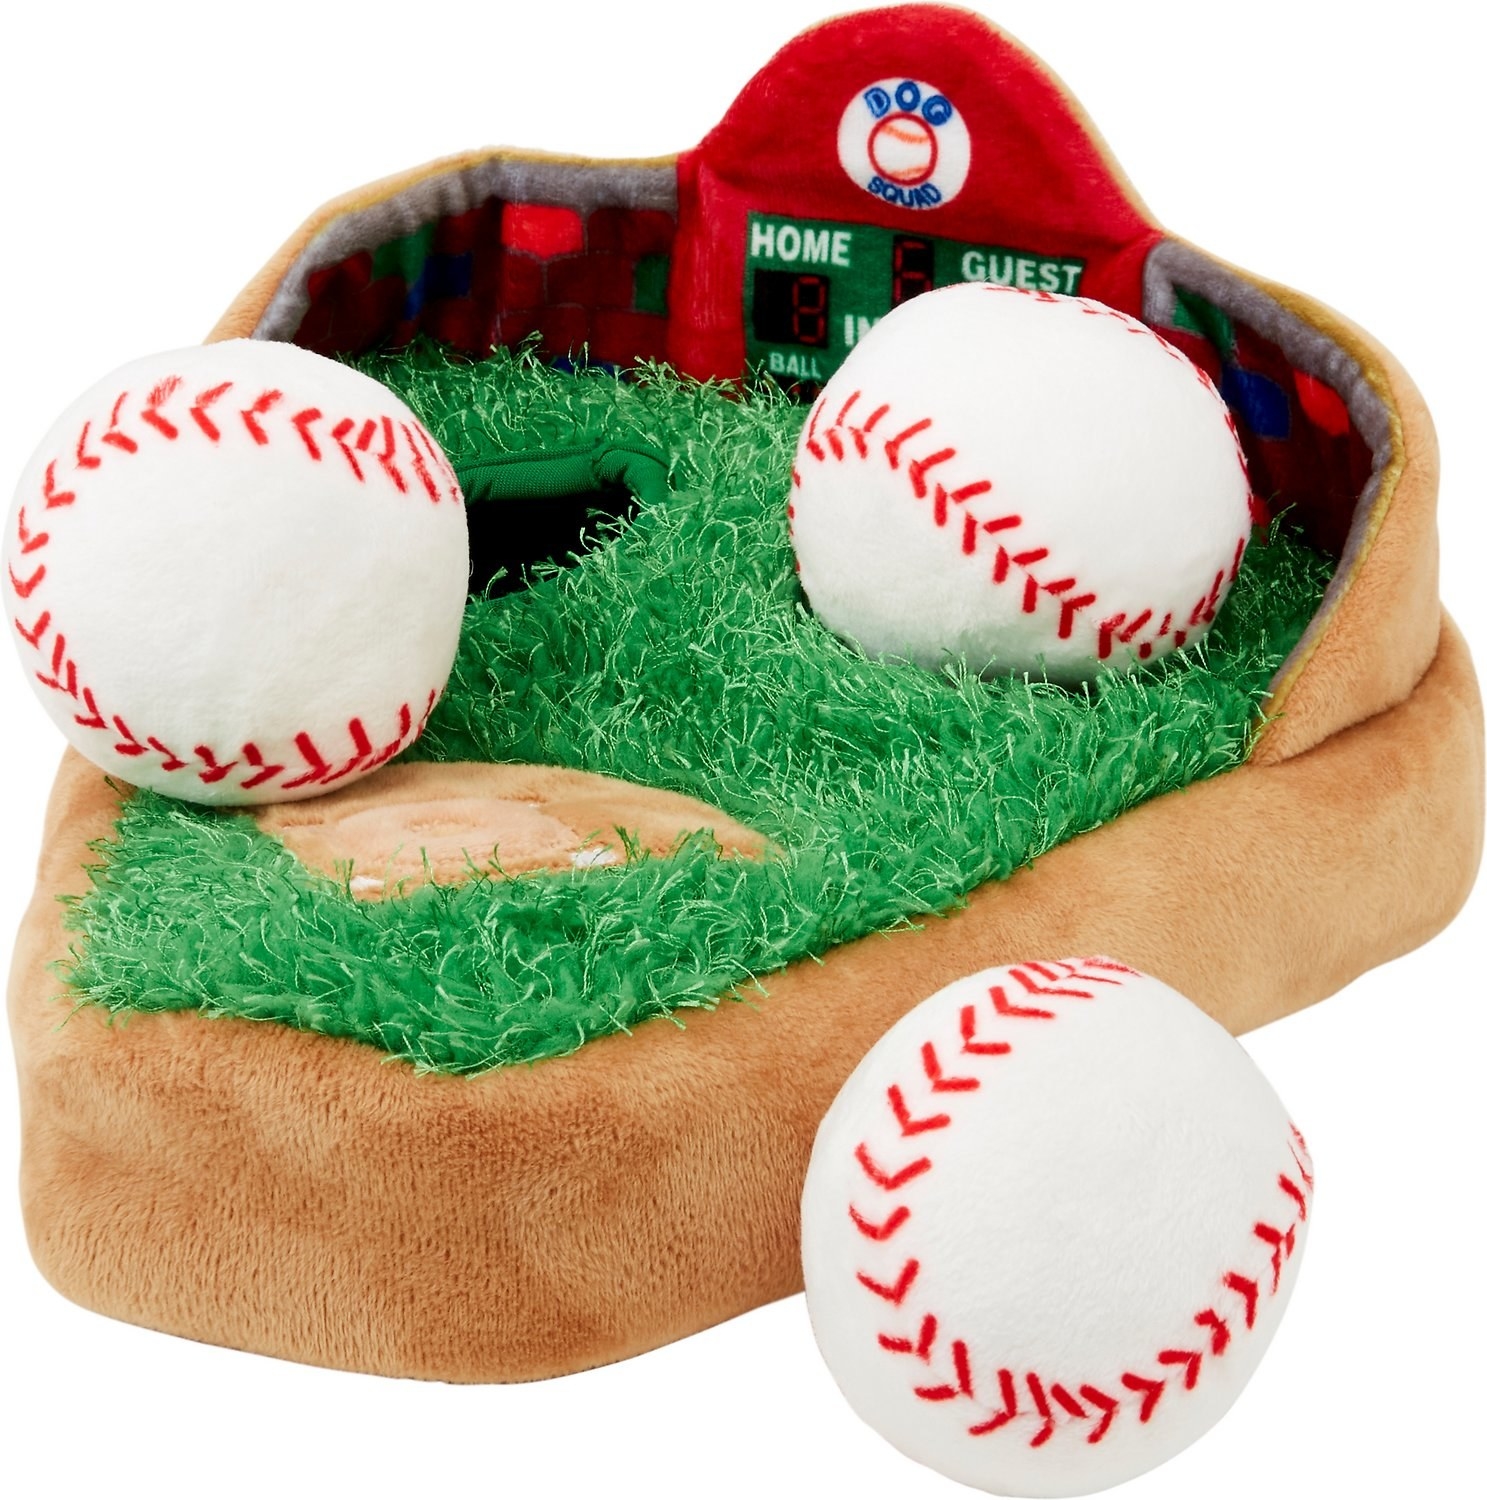 The baseball stadium hide and seek toy